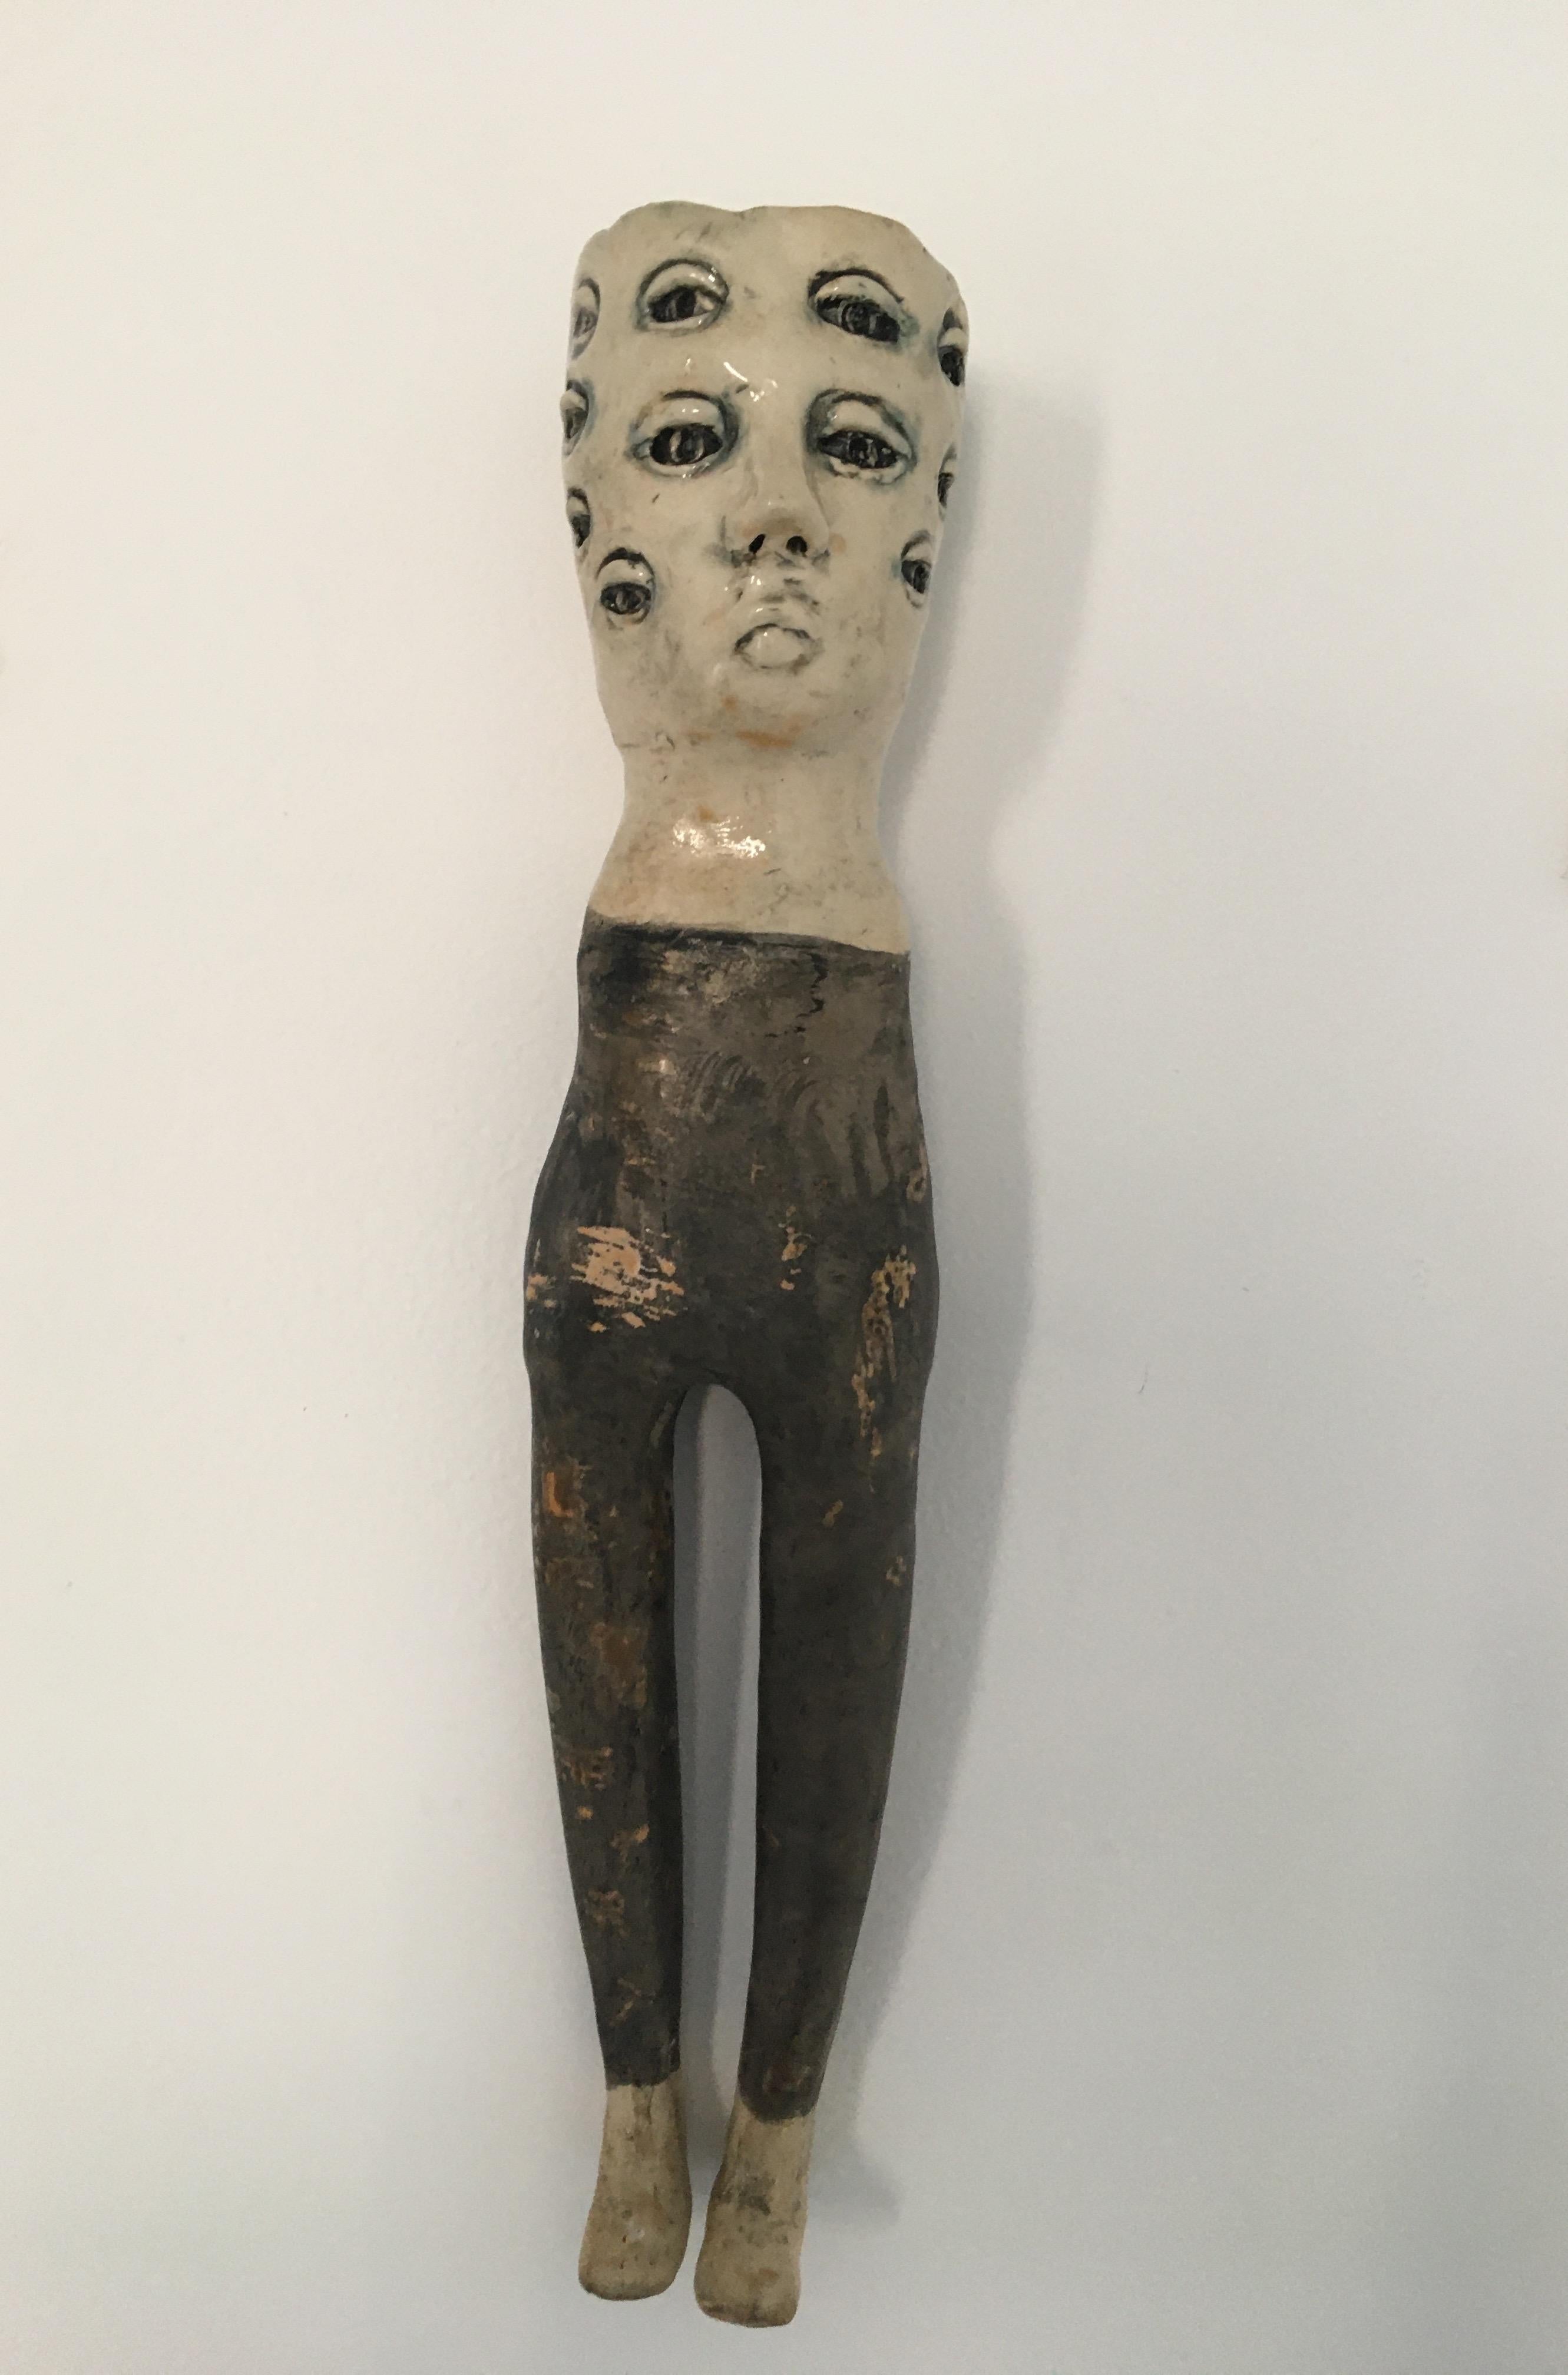 Ashley Benton Figurative Sculpture - Ceramic wall hanging sculpture: 'Keep searching'